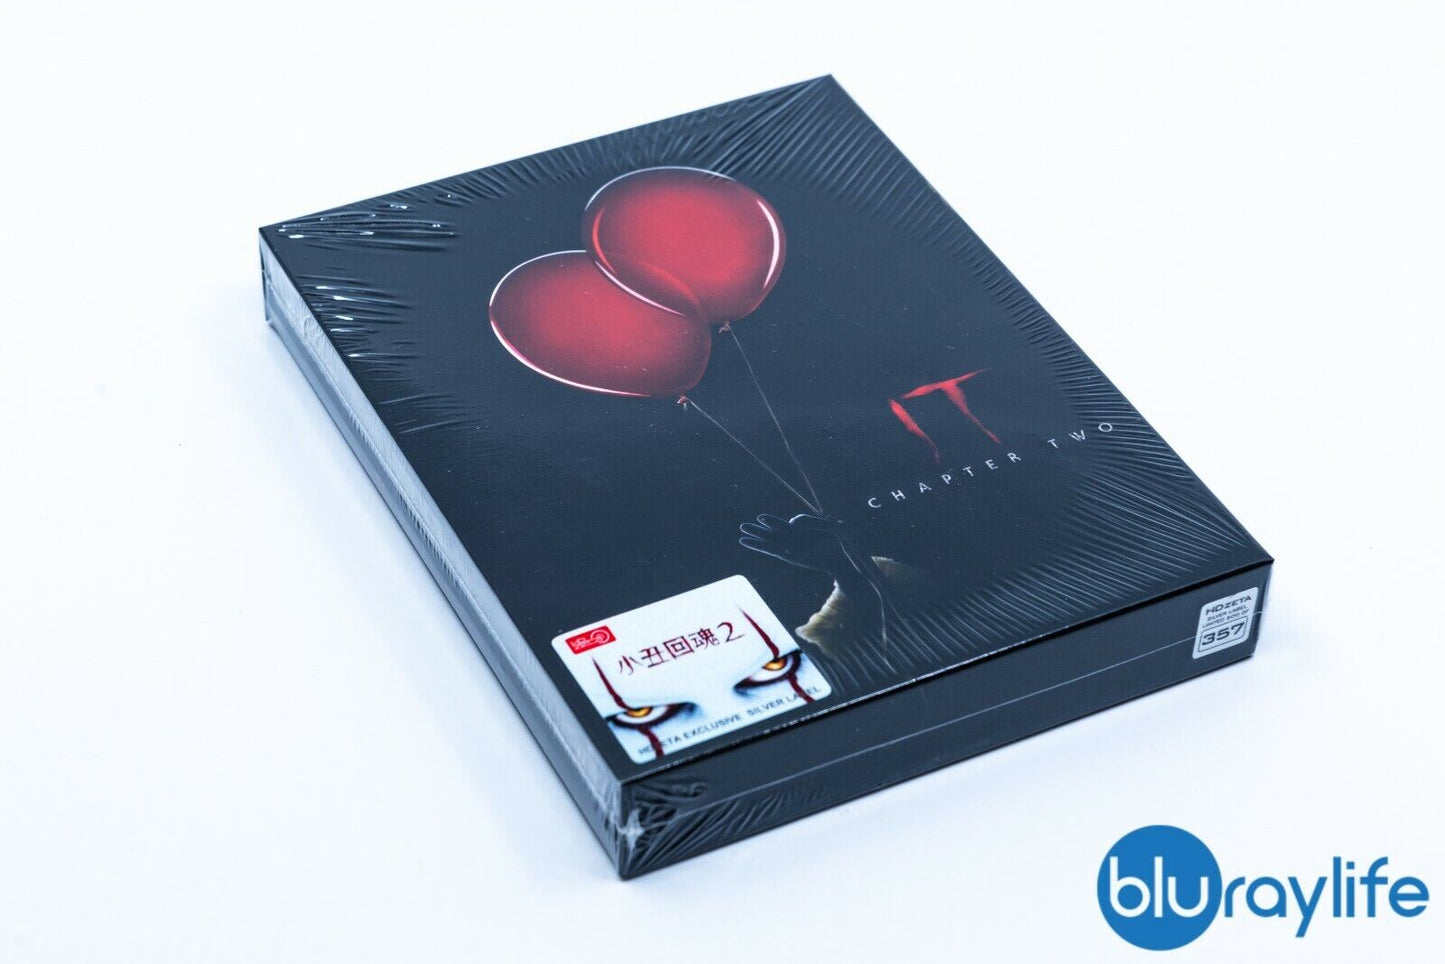 IT Chapter 2 Steelbook One Click Box Set HDzeta Exclusive Silver Label